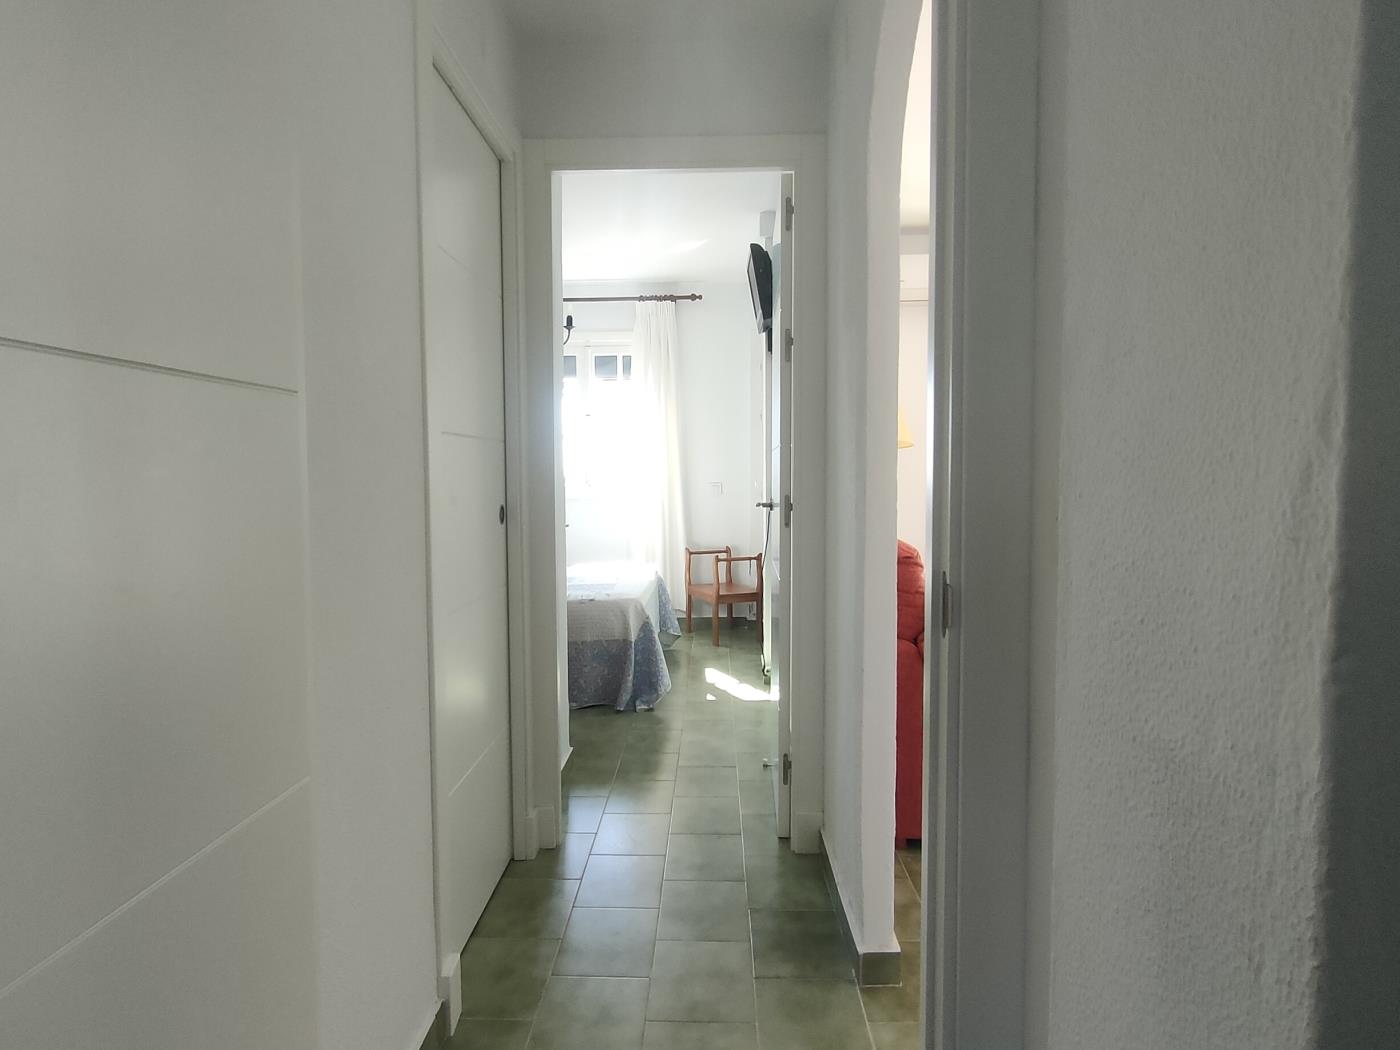 Ref ARIES3. Two-bedroom apartment on the ground floor in Chiclana de la frontera (Cádiz)